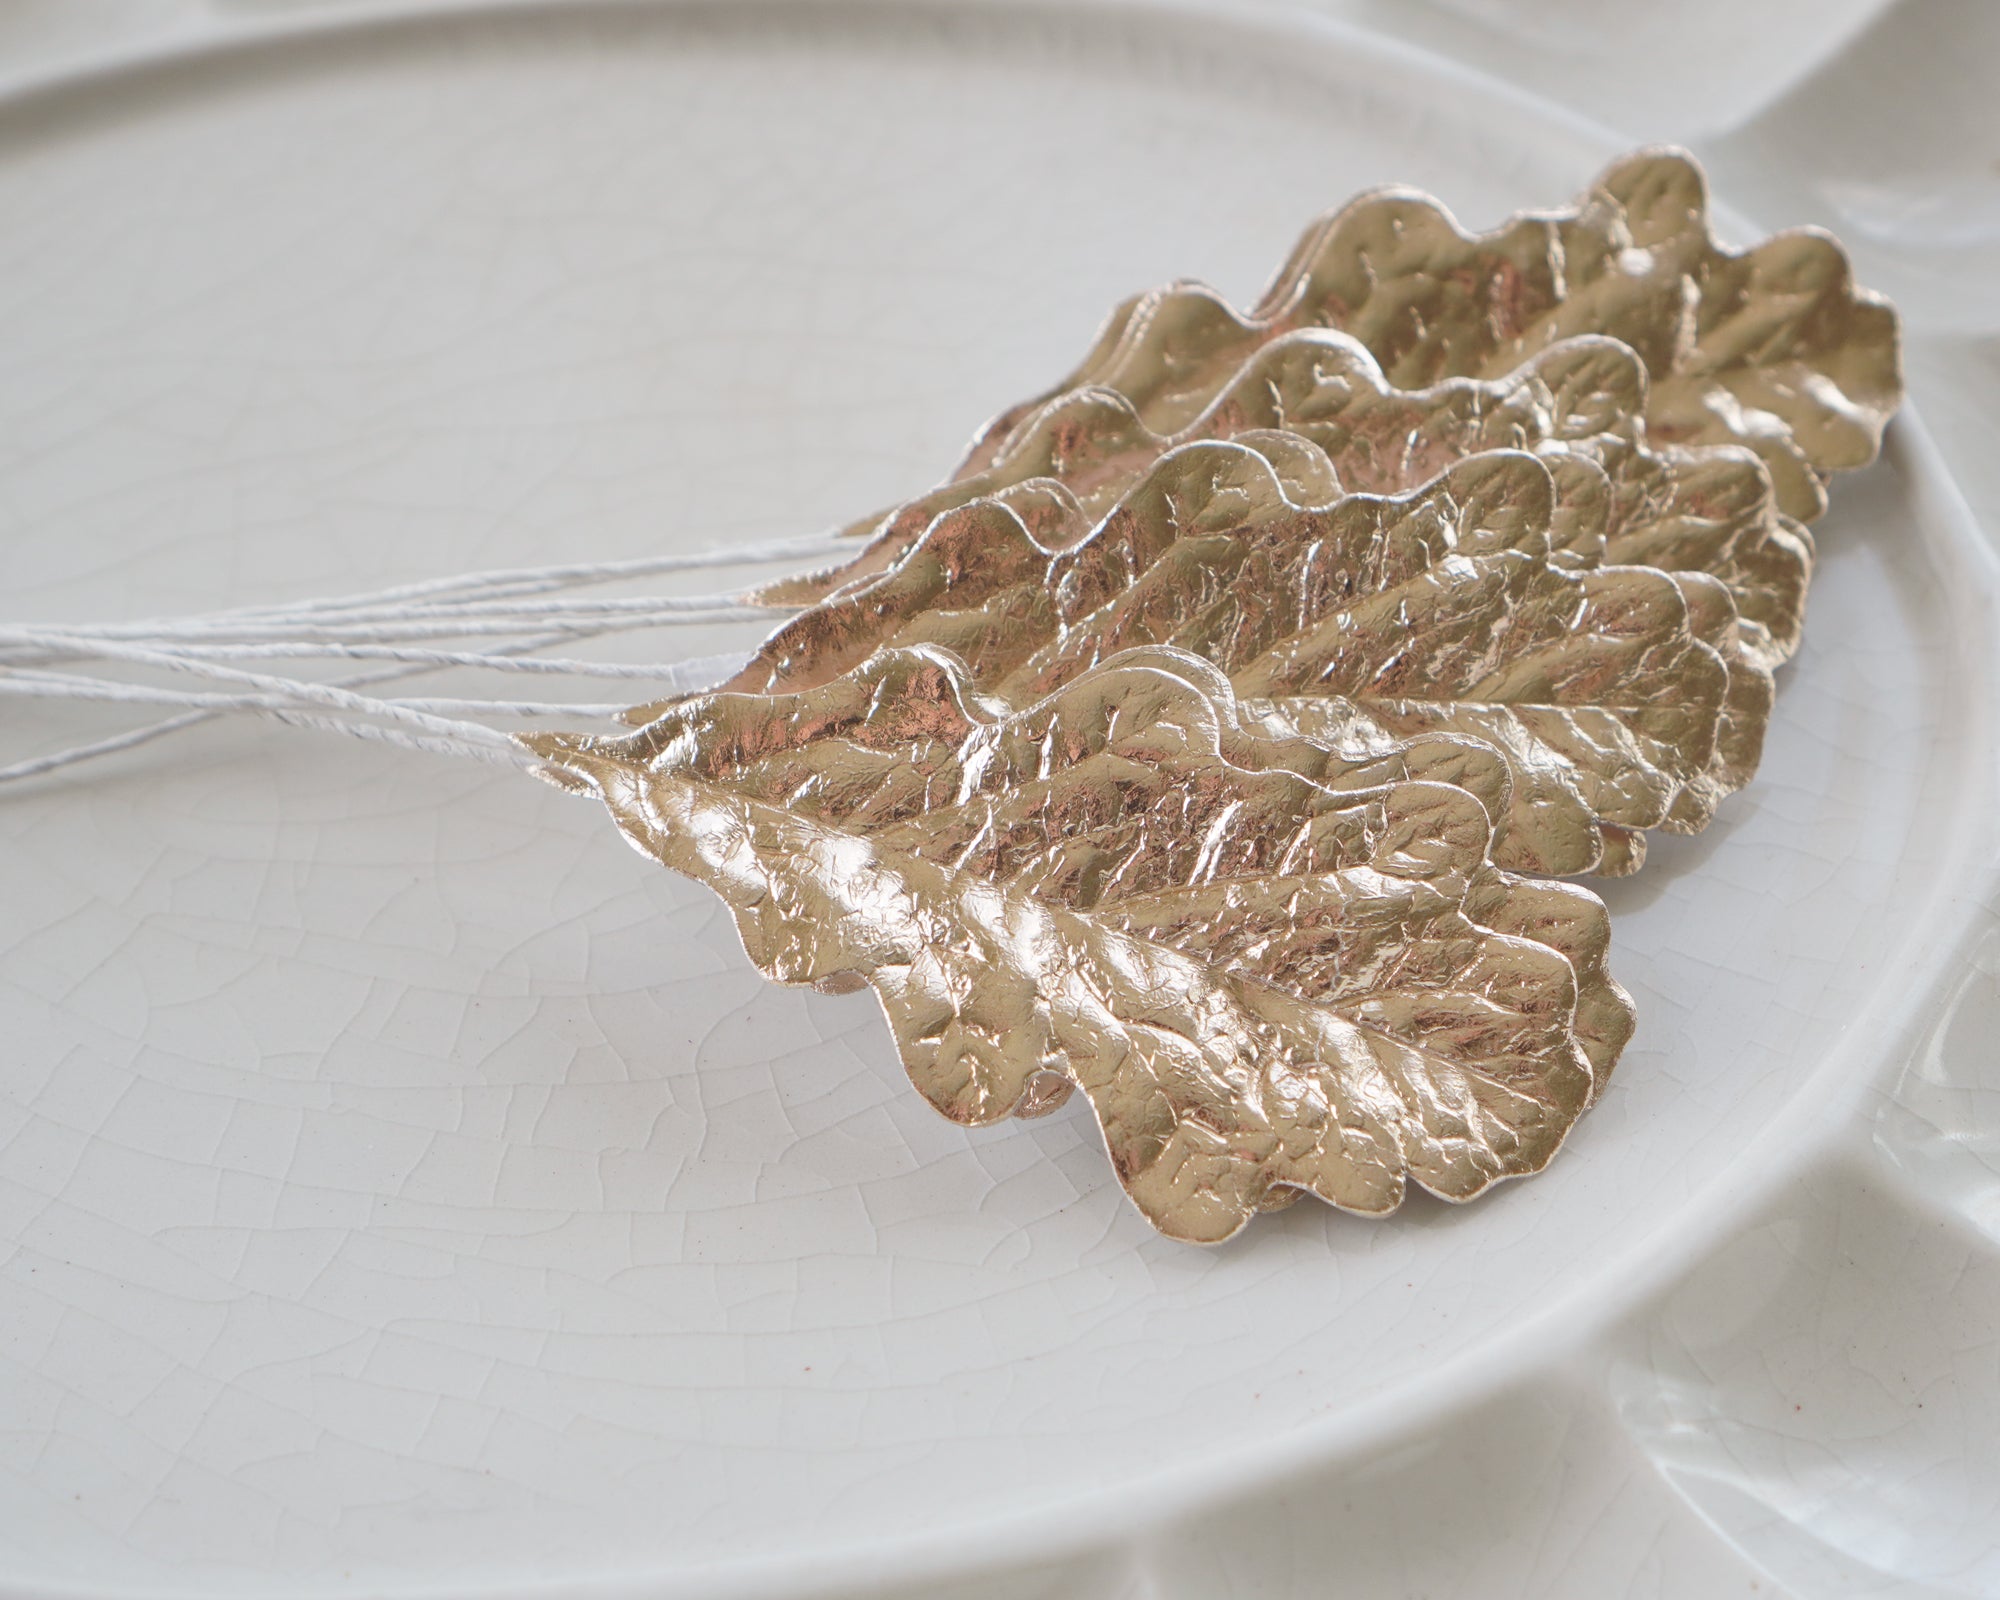 Oak Leaves - Metallic Gold Foiled Paper Autumn Craft Leaf Stems, 10 Pcs.